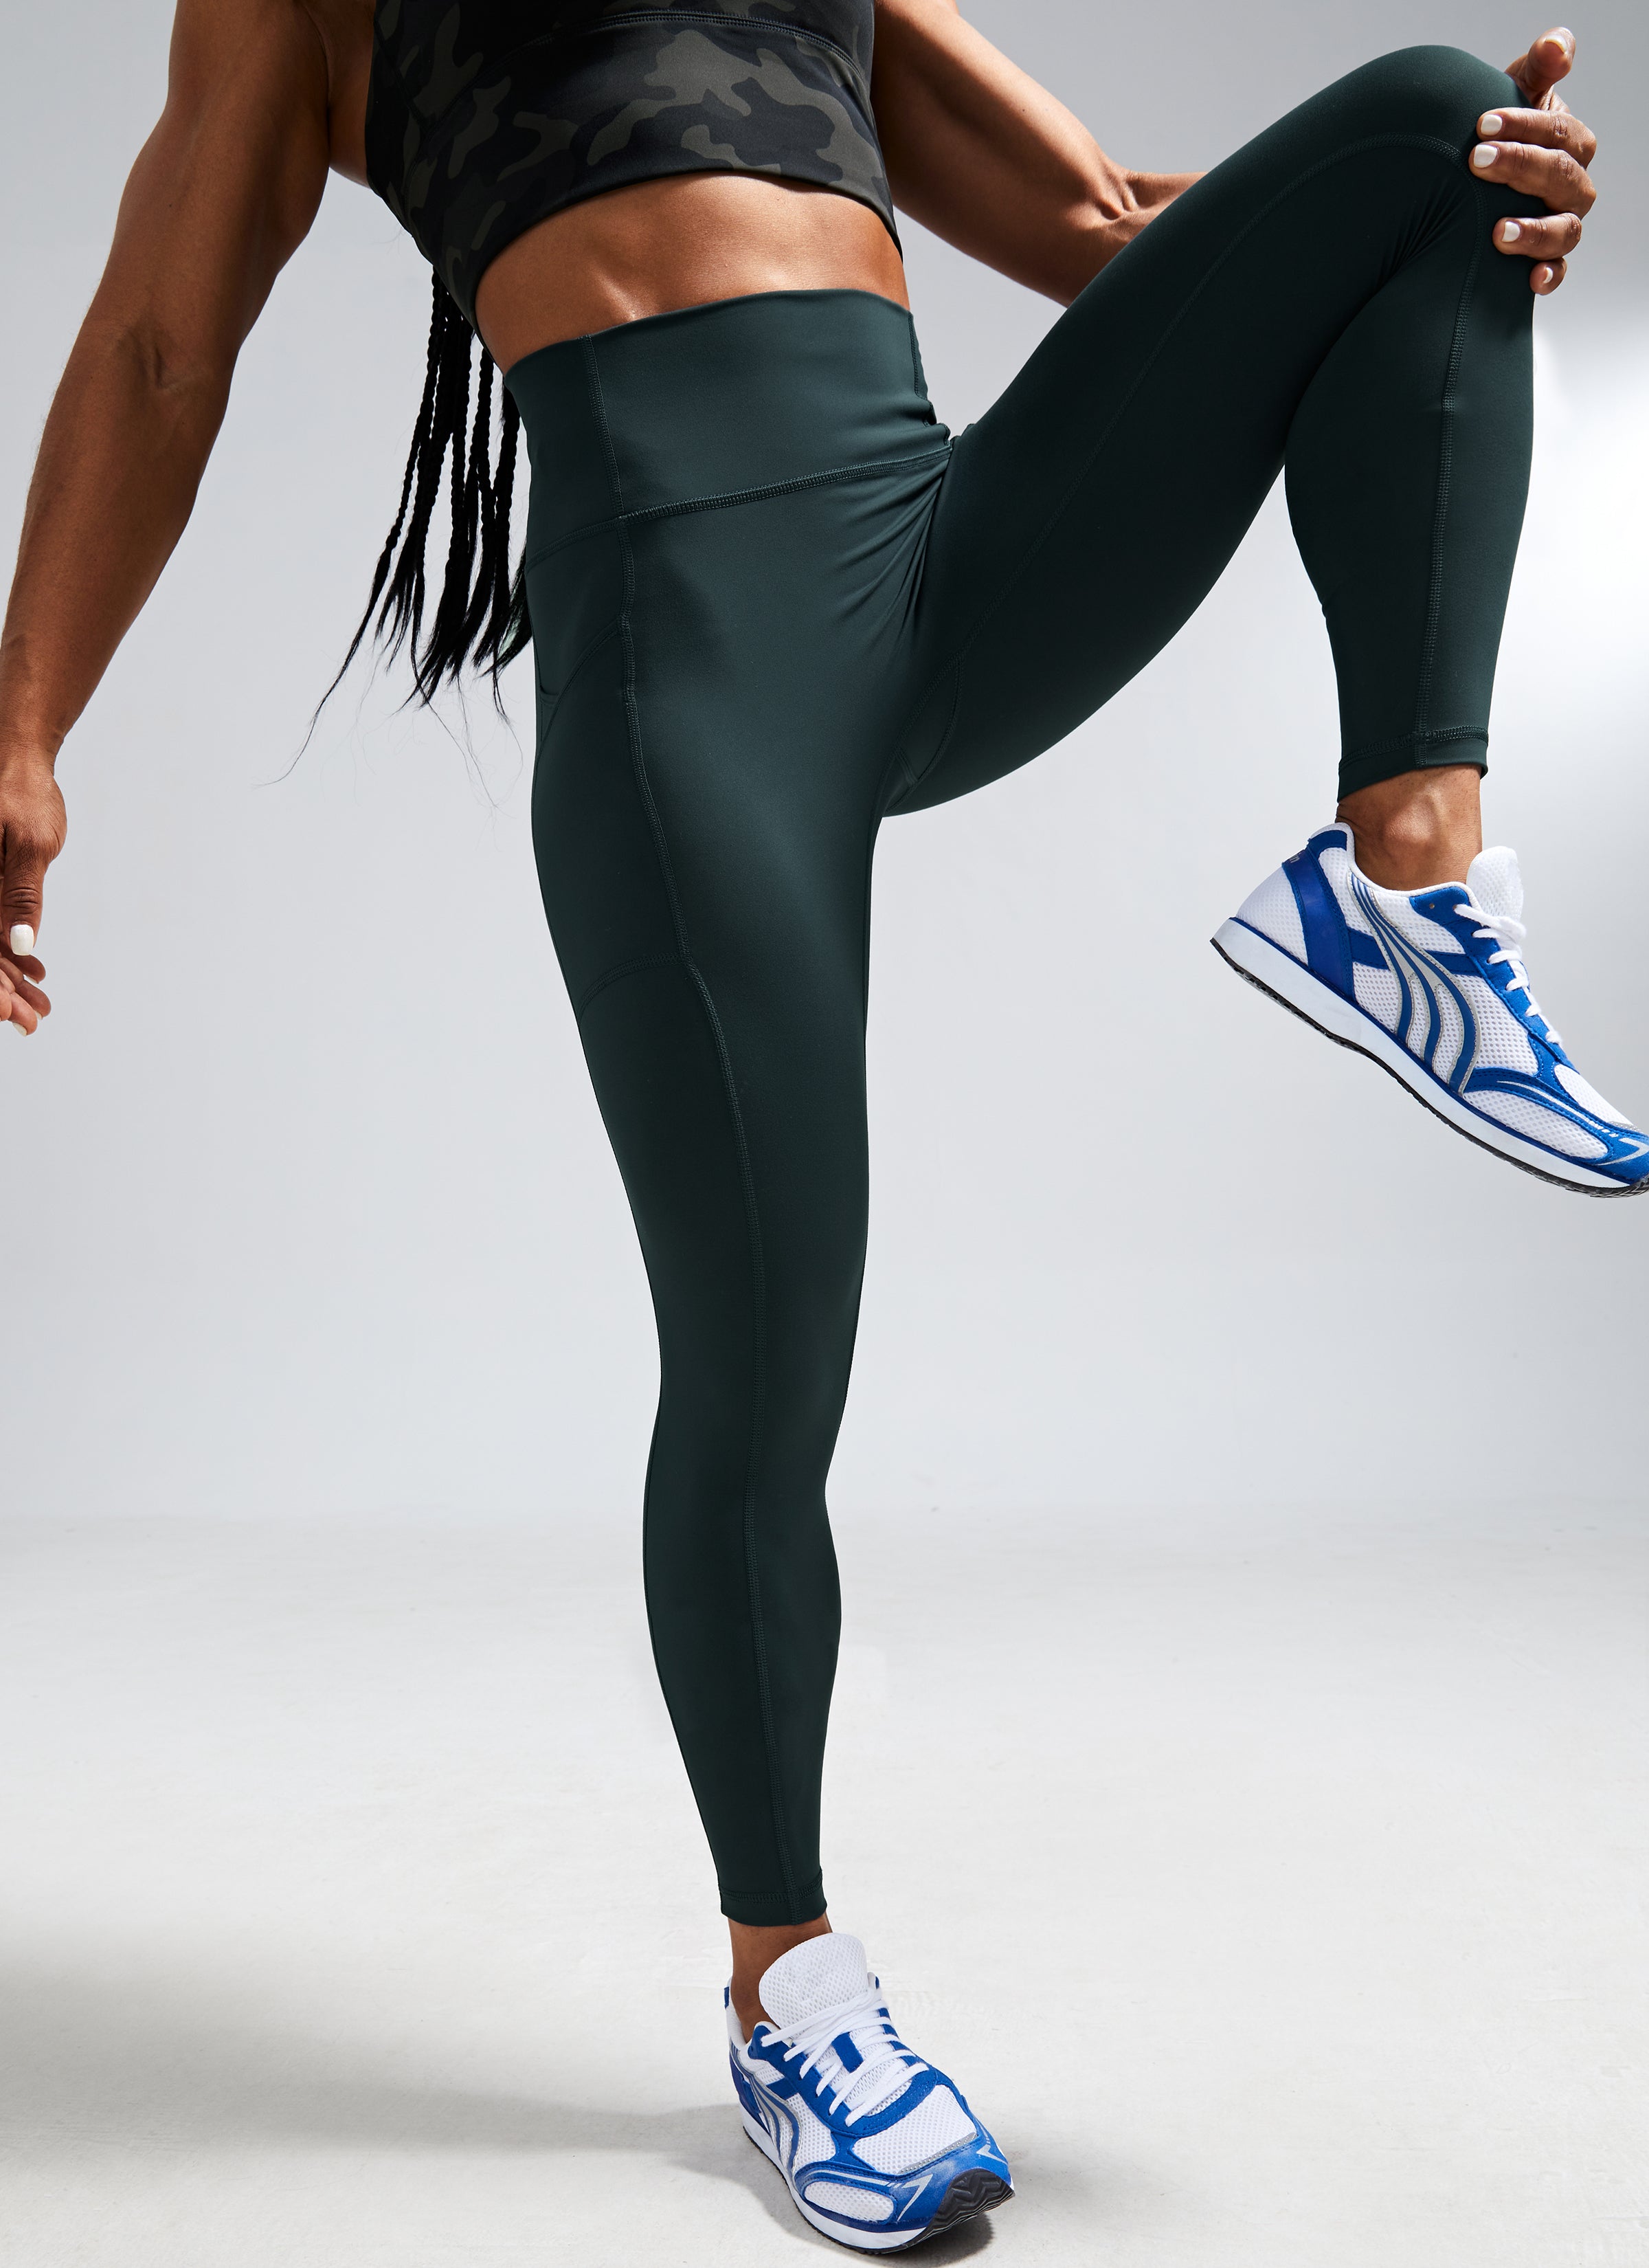  Kissprom Yoga Pants for Women with Back Pocket Running Workout  Leggings Exercise Leggings for Women High Waist : Sports & Outdoors